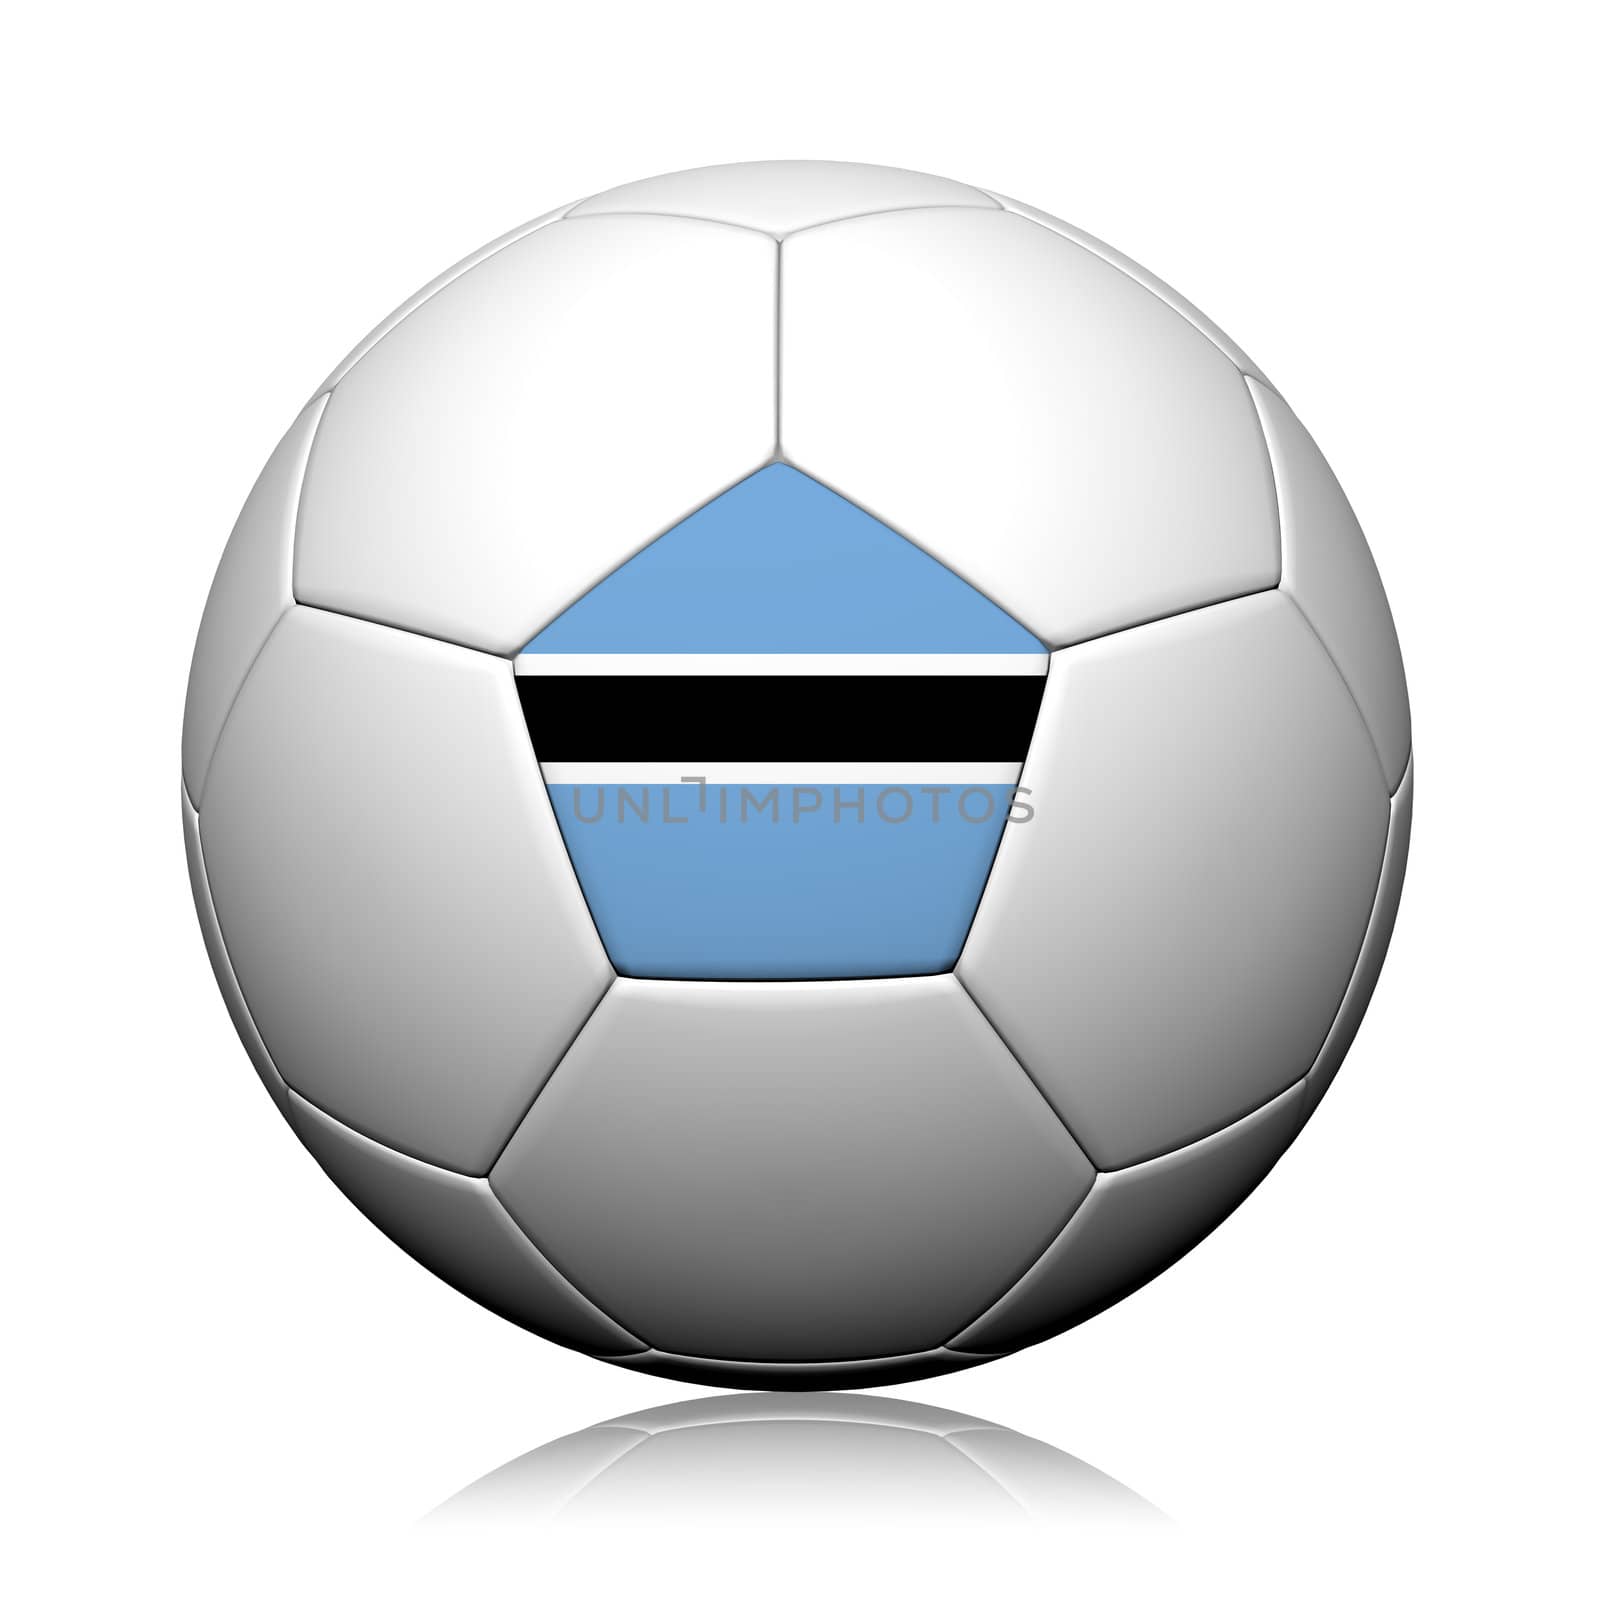 Botswana Flag Pattern 3d rendering of a soccer ball by jakgree